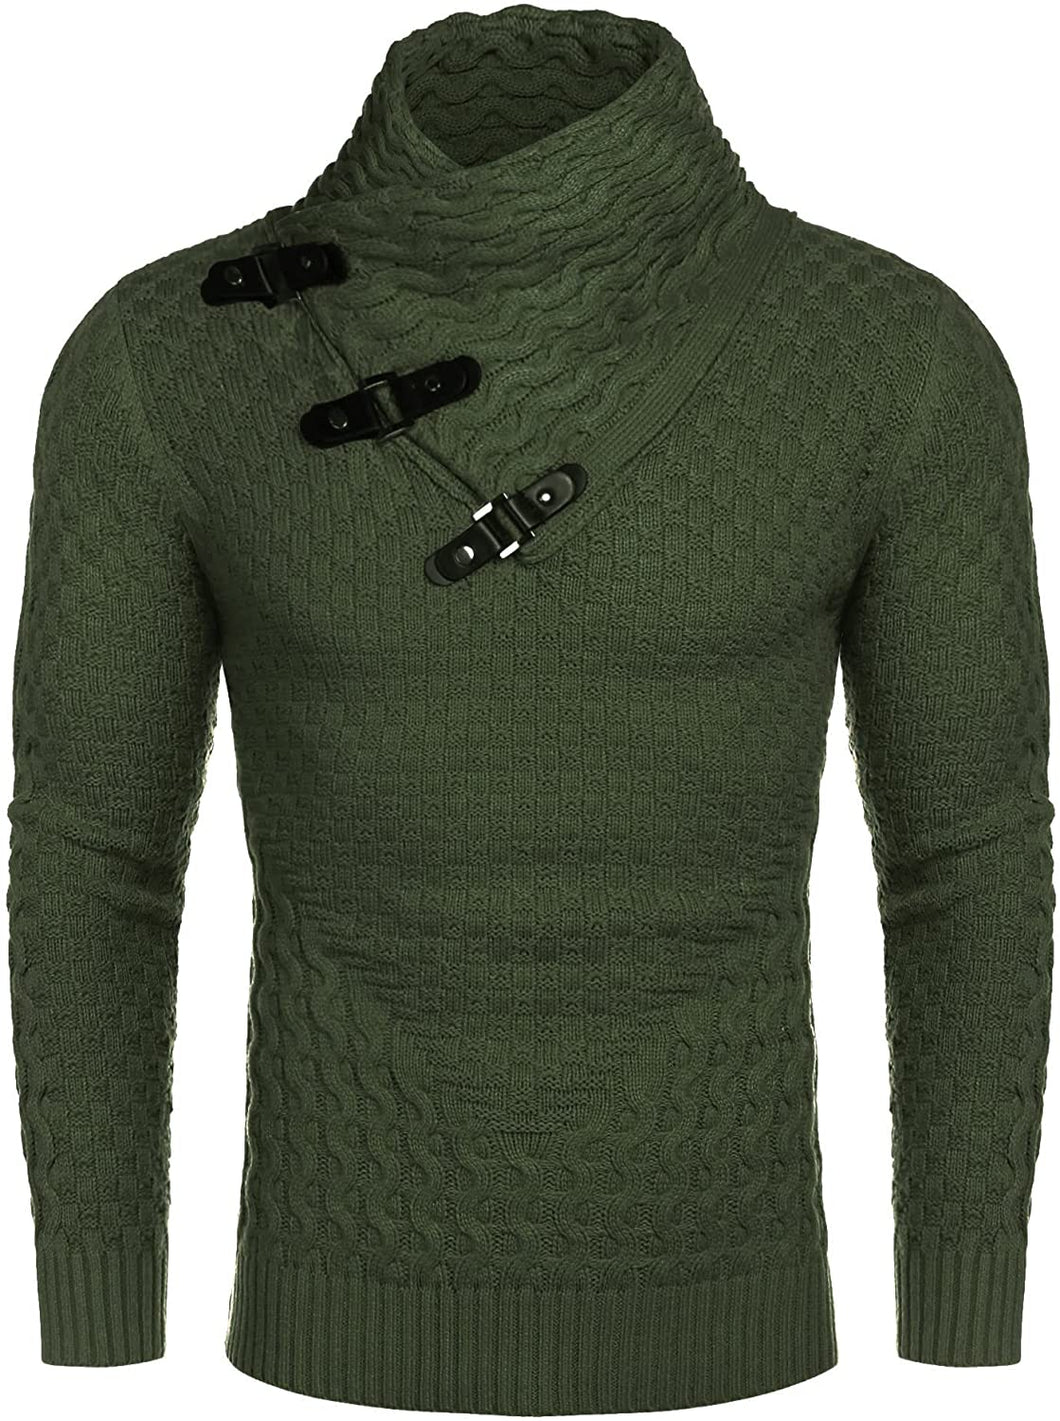 Men's Army Green Long Sleeve Designer Knitted Turtleneck Sweater